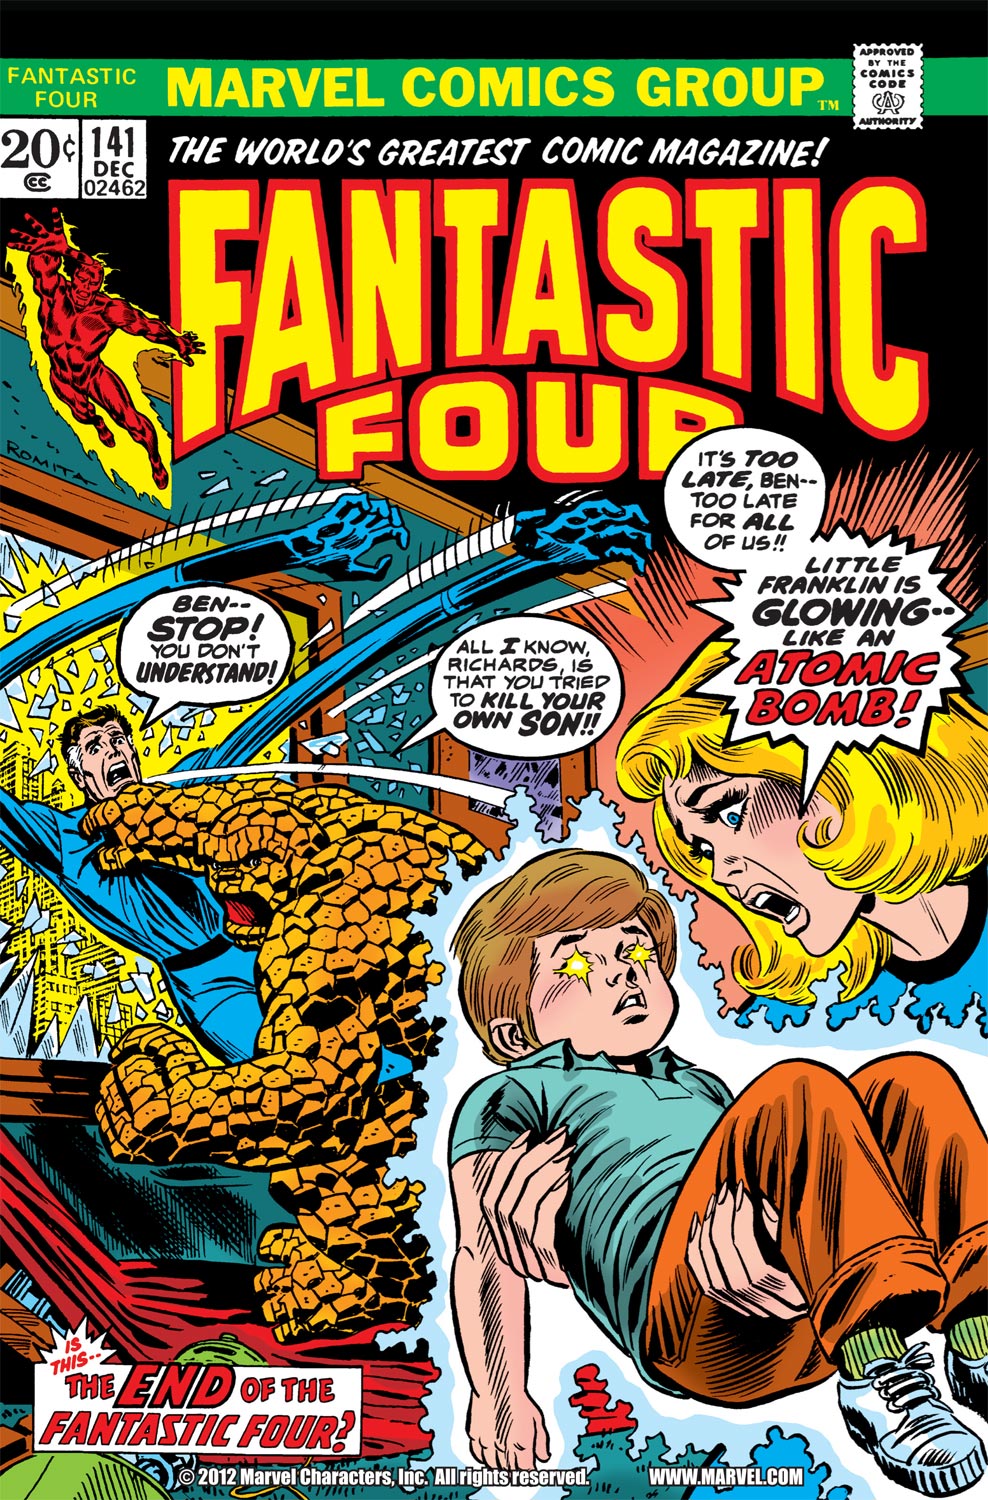 Fantastic Four (1961) #141